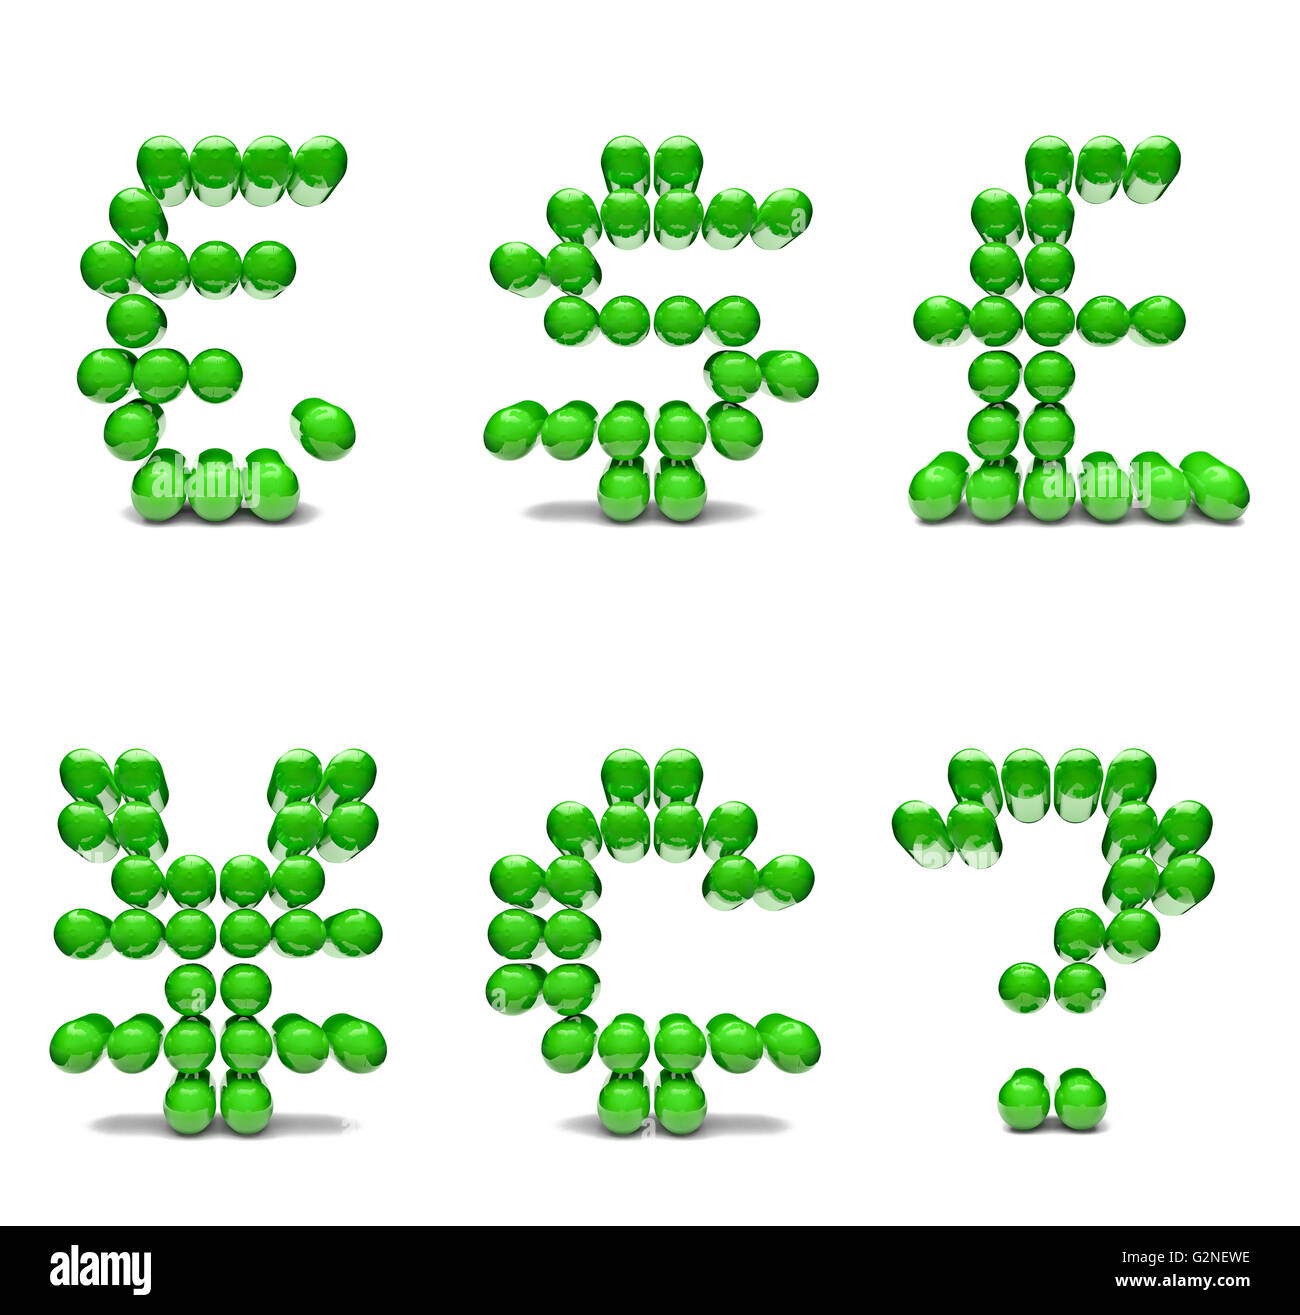 3D illustration of dot matrix alphabet Stock Photo